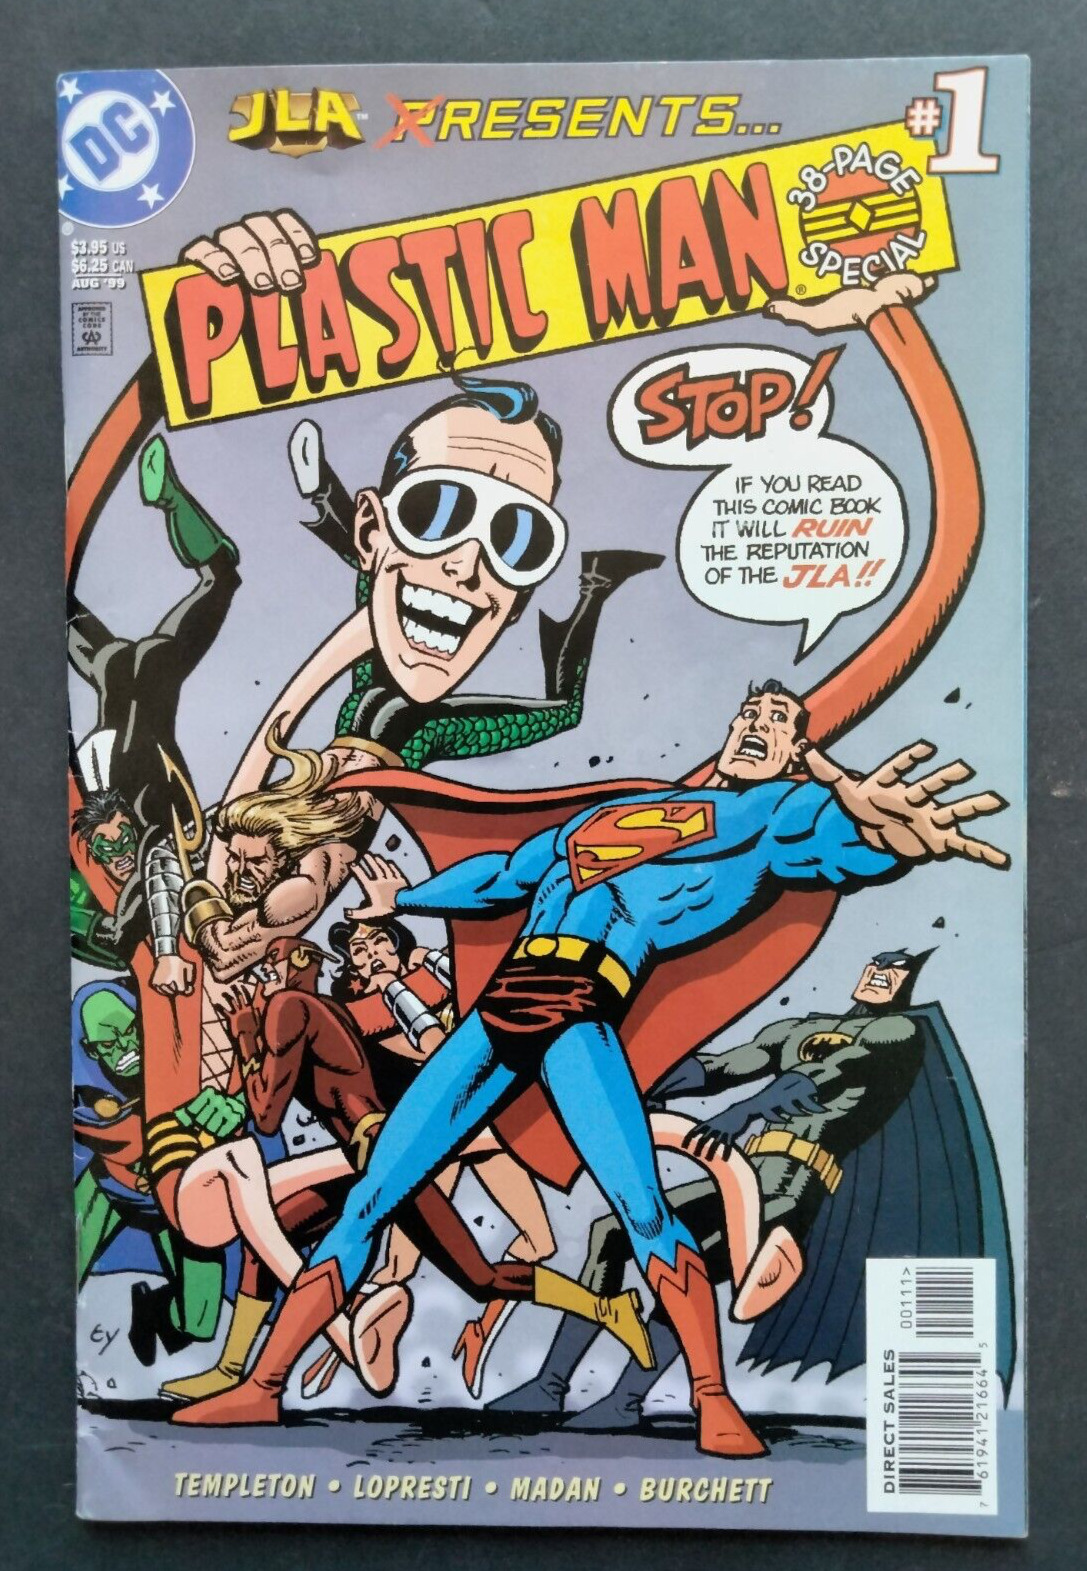 JLA Presents... Plastic Man - 38 Page Special DC 1999 #1 - VF